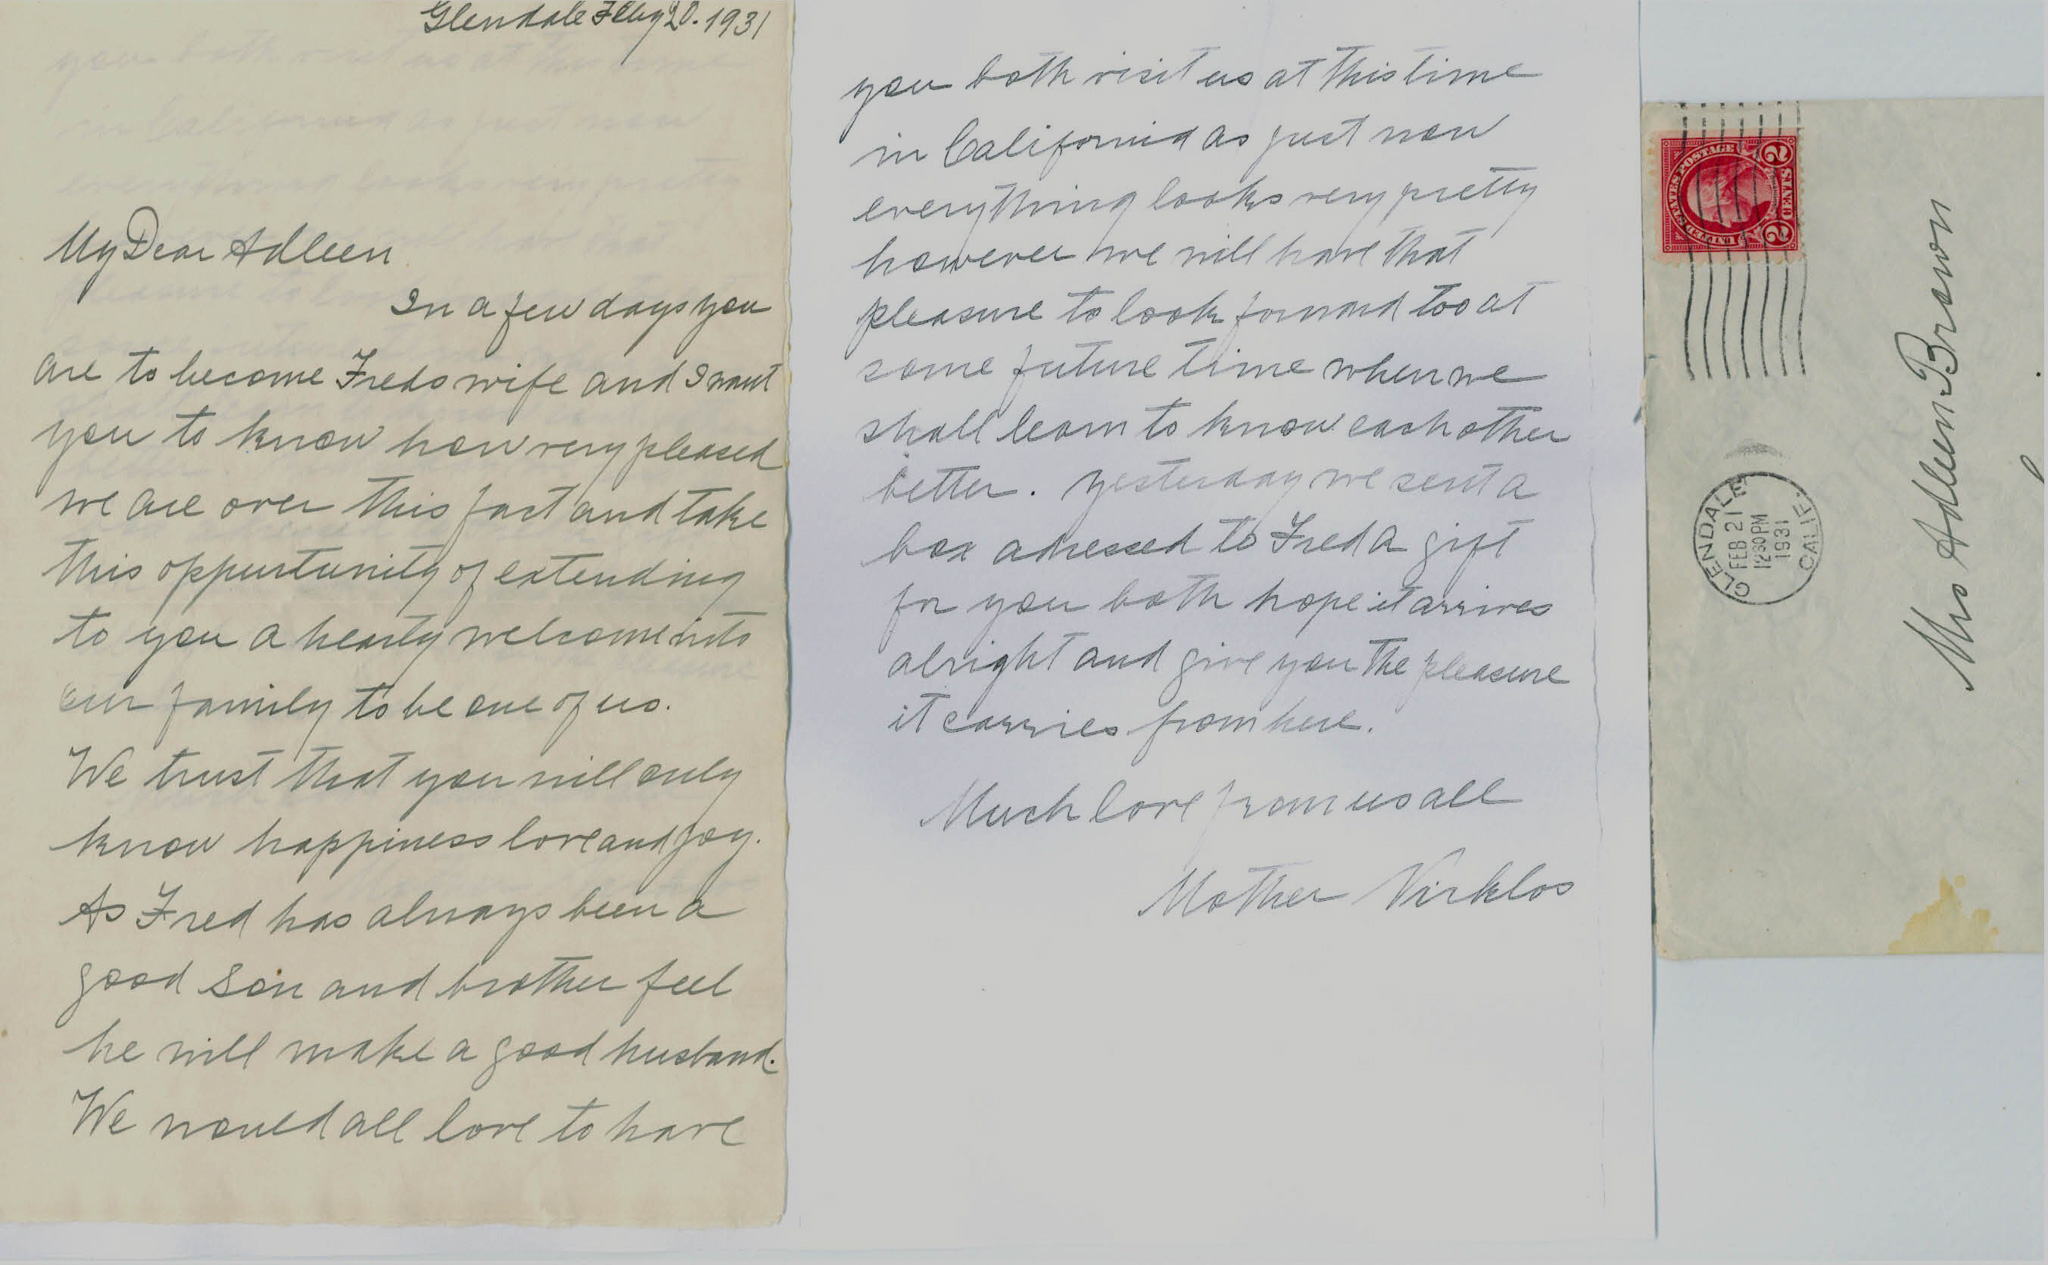 Nicklos Jessie (McDowell) letter